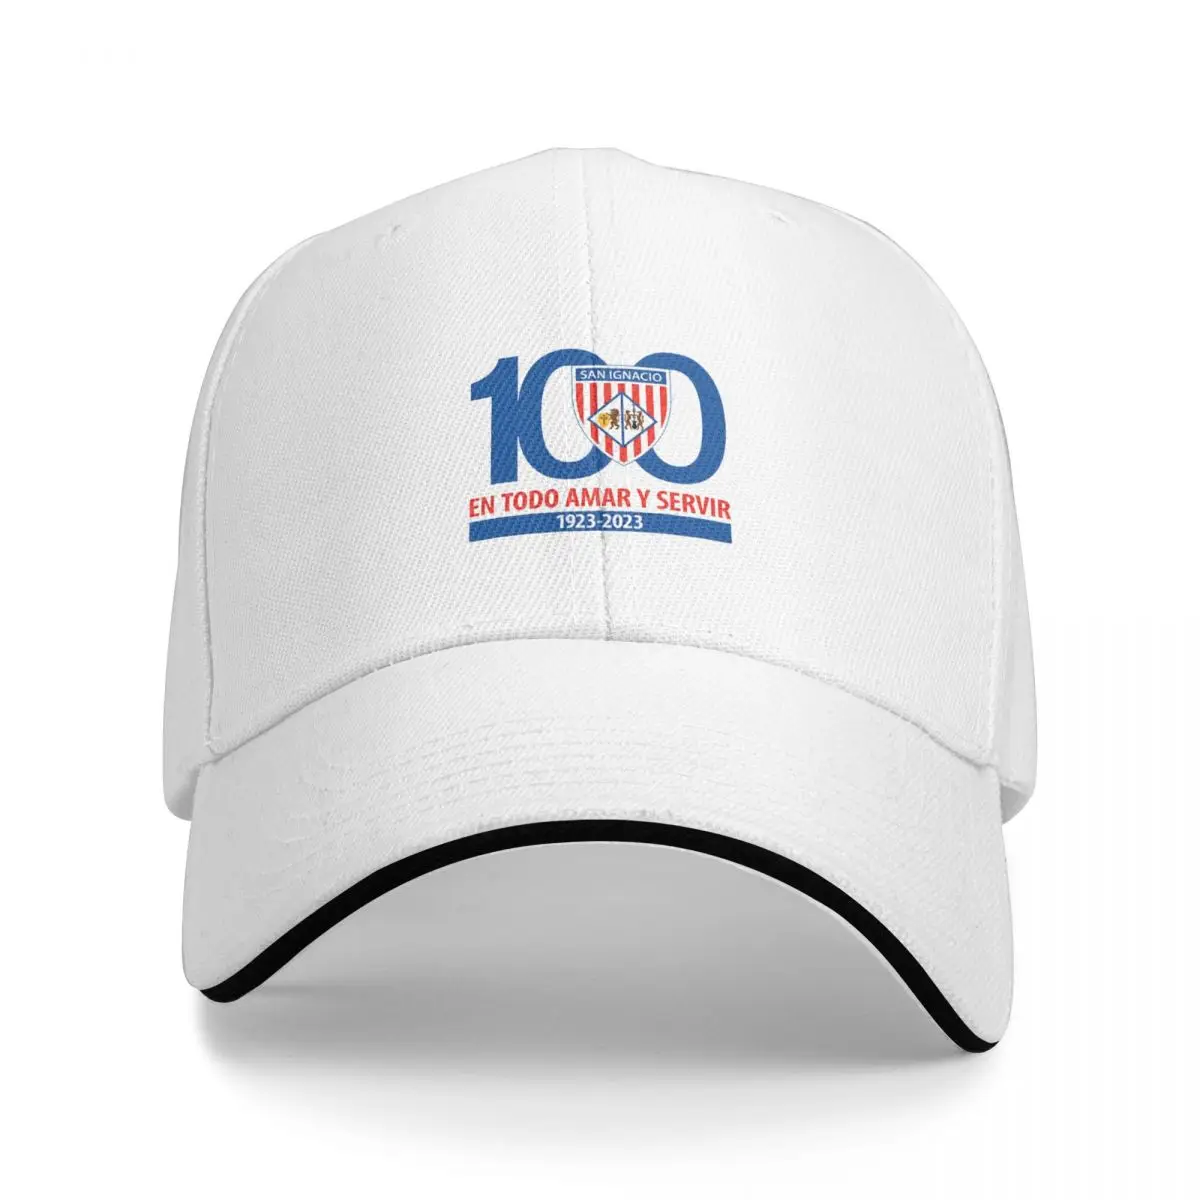 

100 Anos Colegio San Ignacio Baseball Caps Fashion Men Women Hats Adjustable Casual Cap Sports Baseball Hat Polychromatic